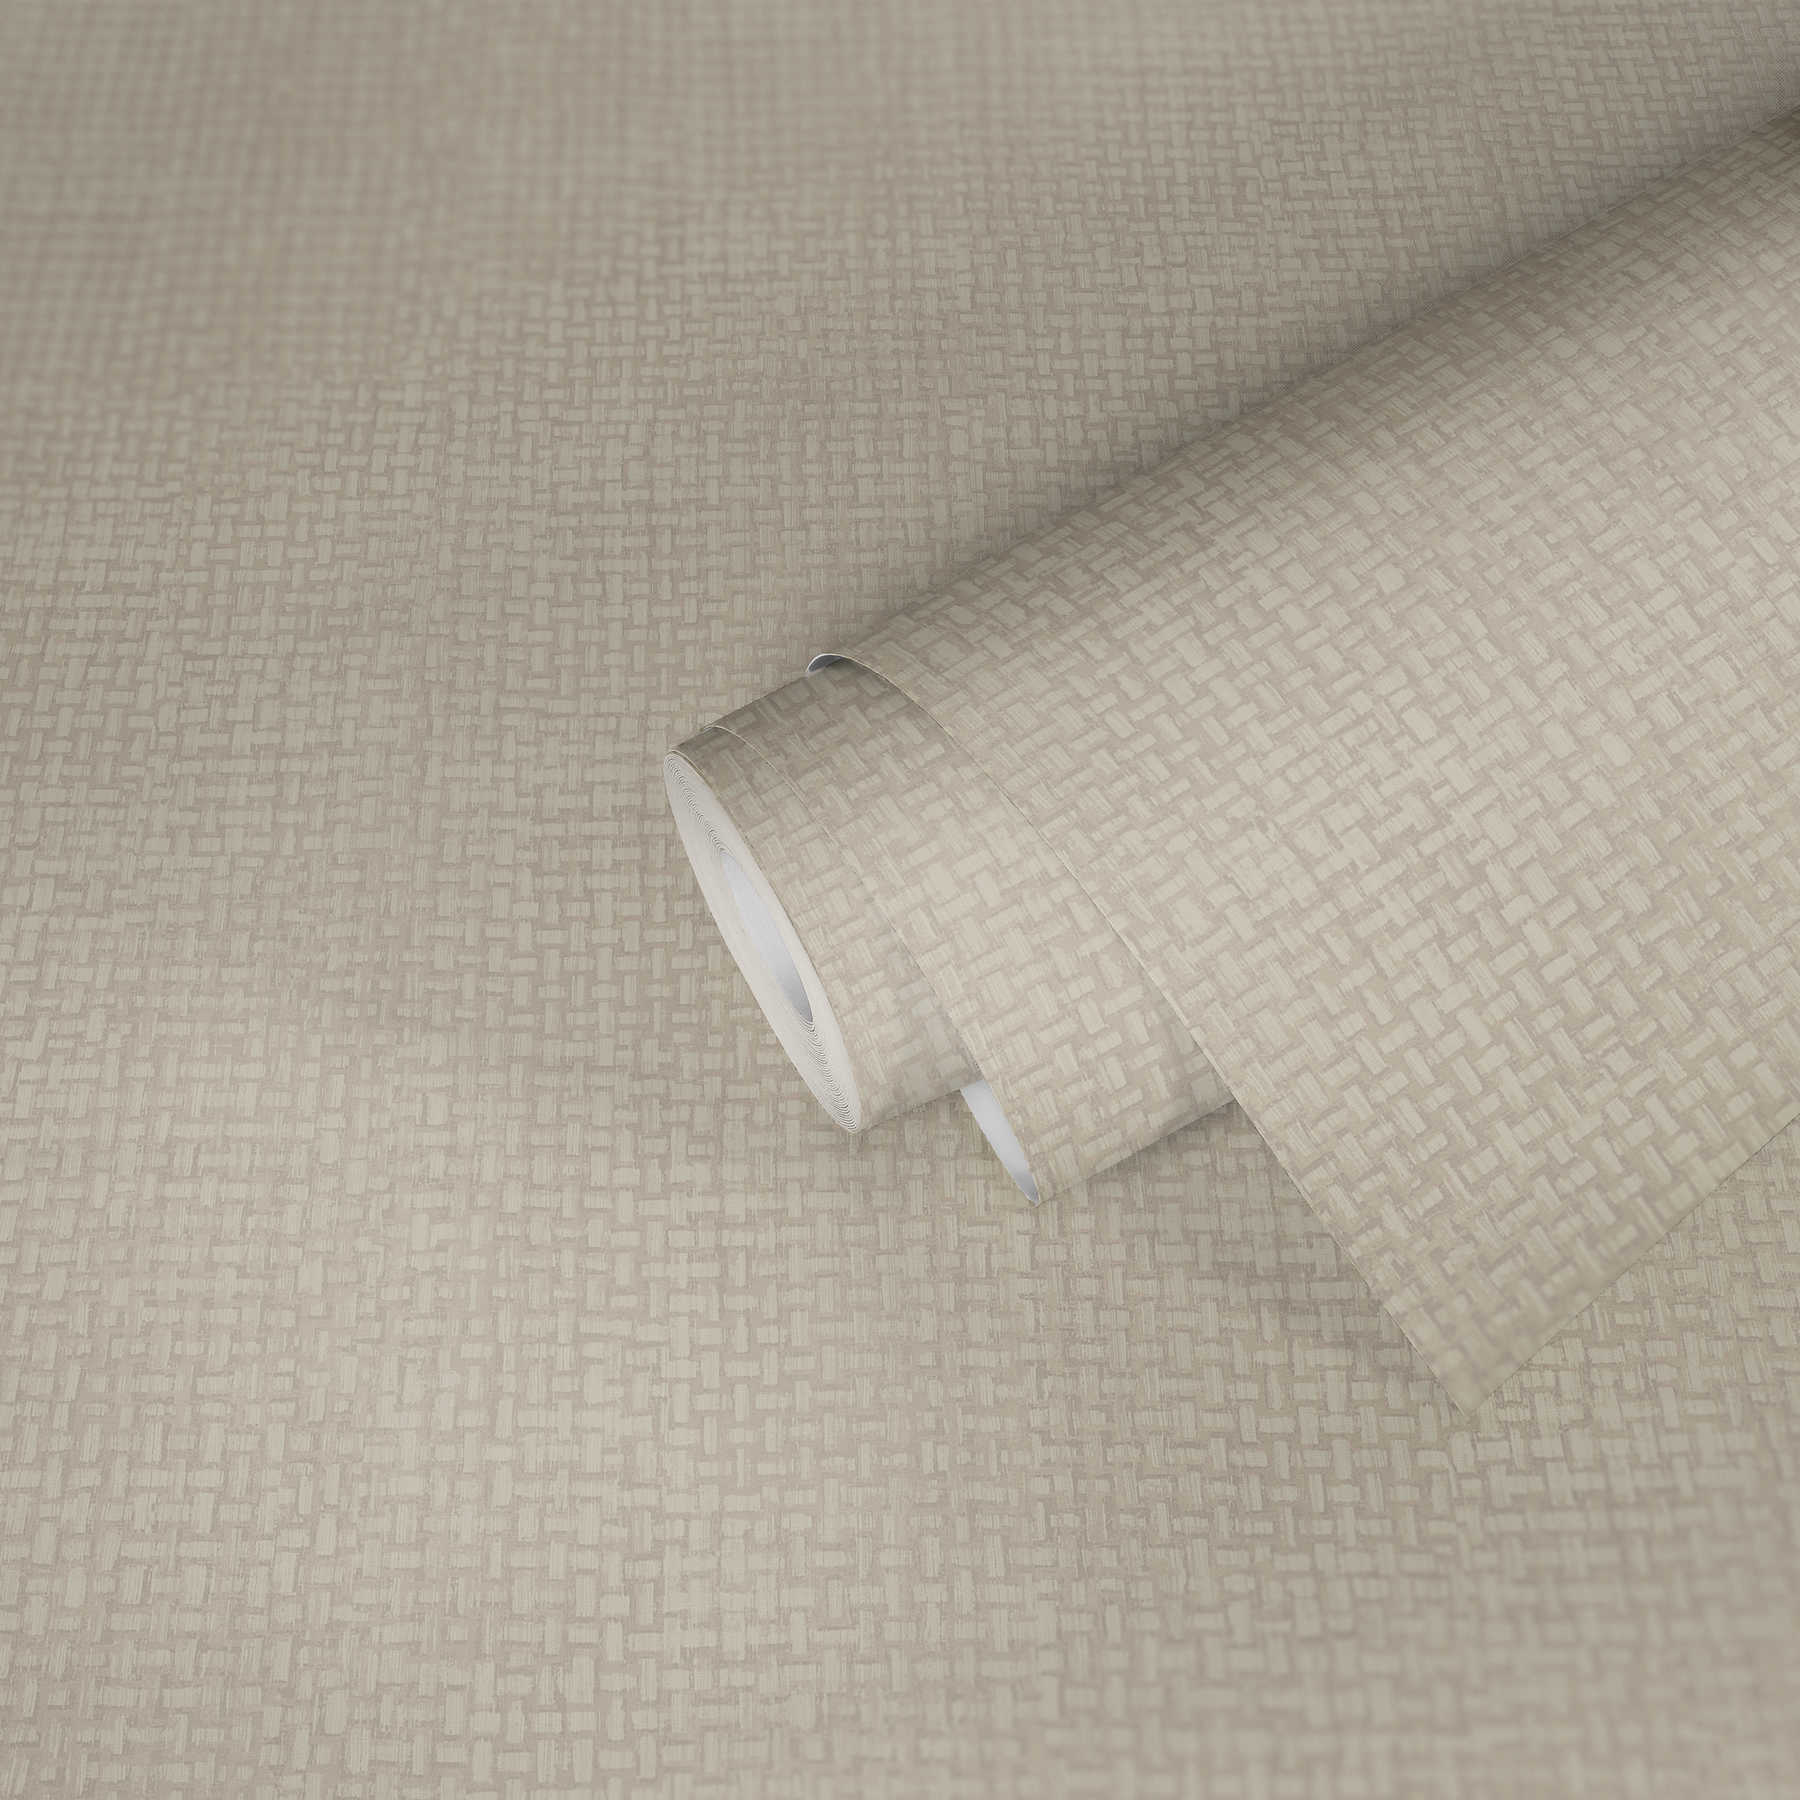             Tapete Textil-Look mit Flechtstruktur – Beige, Grau
        